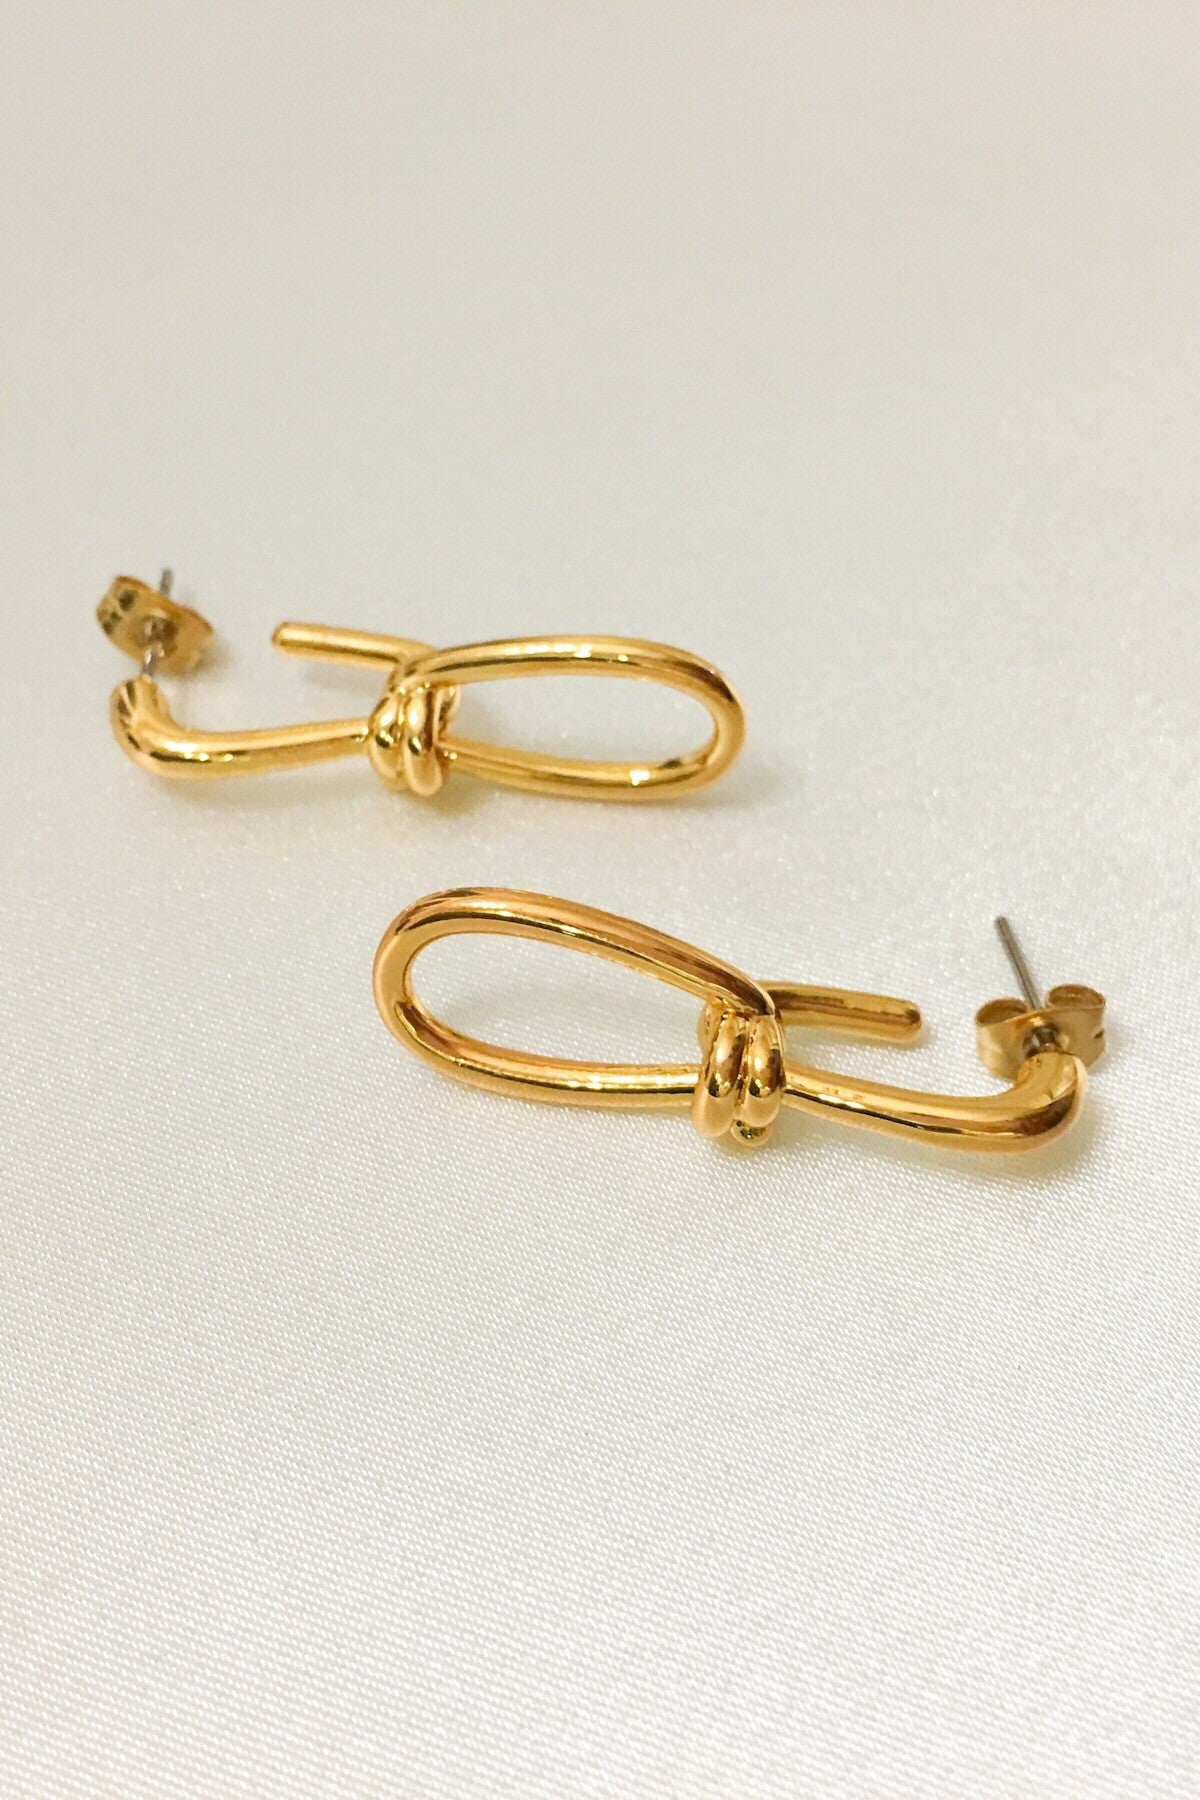 SKYE San Francisco SF California shop ethical sustainable modern minimalist quality women jewelry Artus 18K Gold Earrings